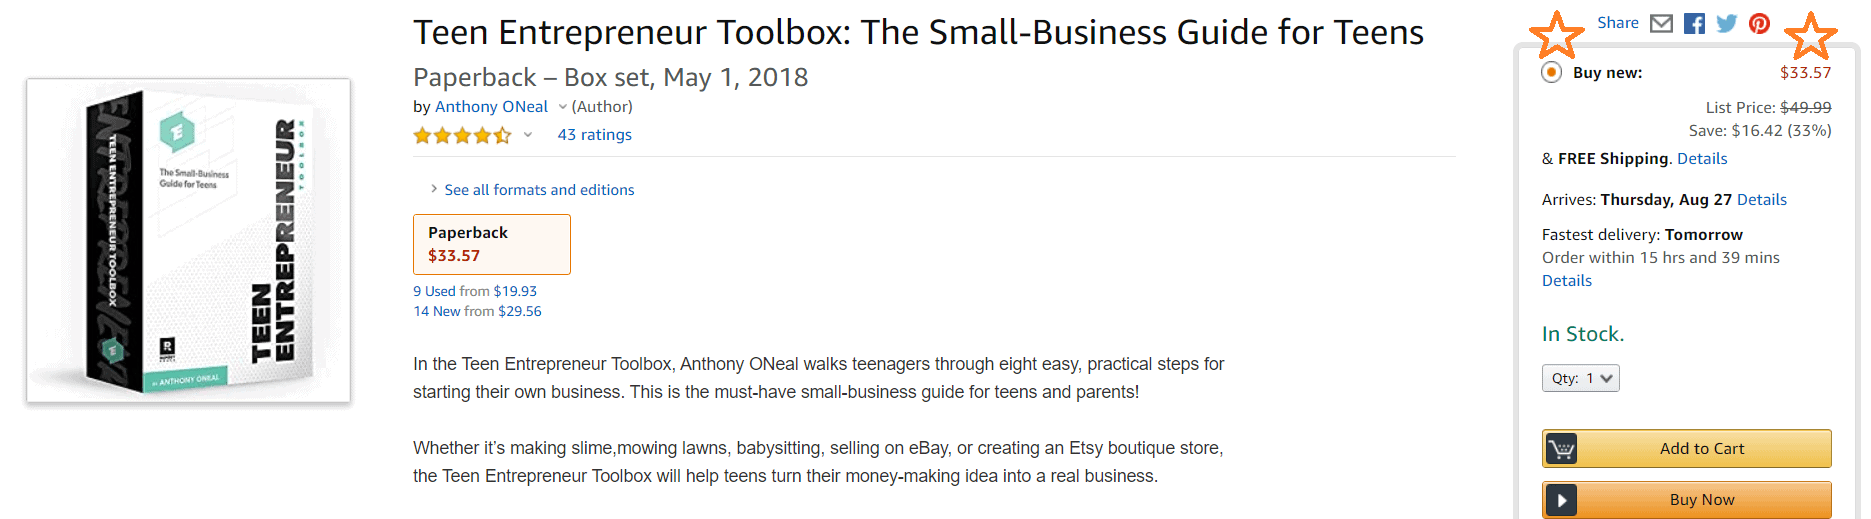 screenshot of amazon teen entrepreneur toolbox listing, brand new, for $33.57